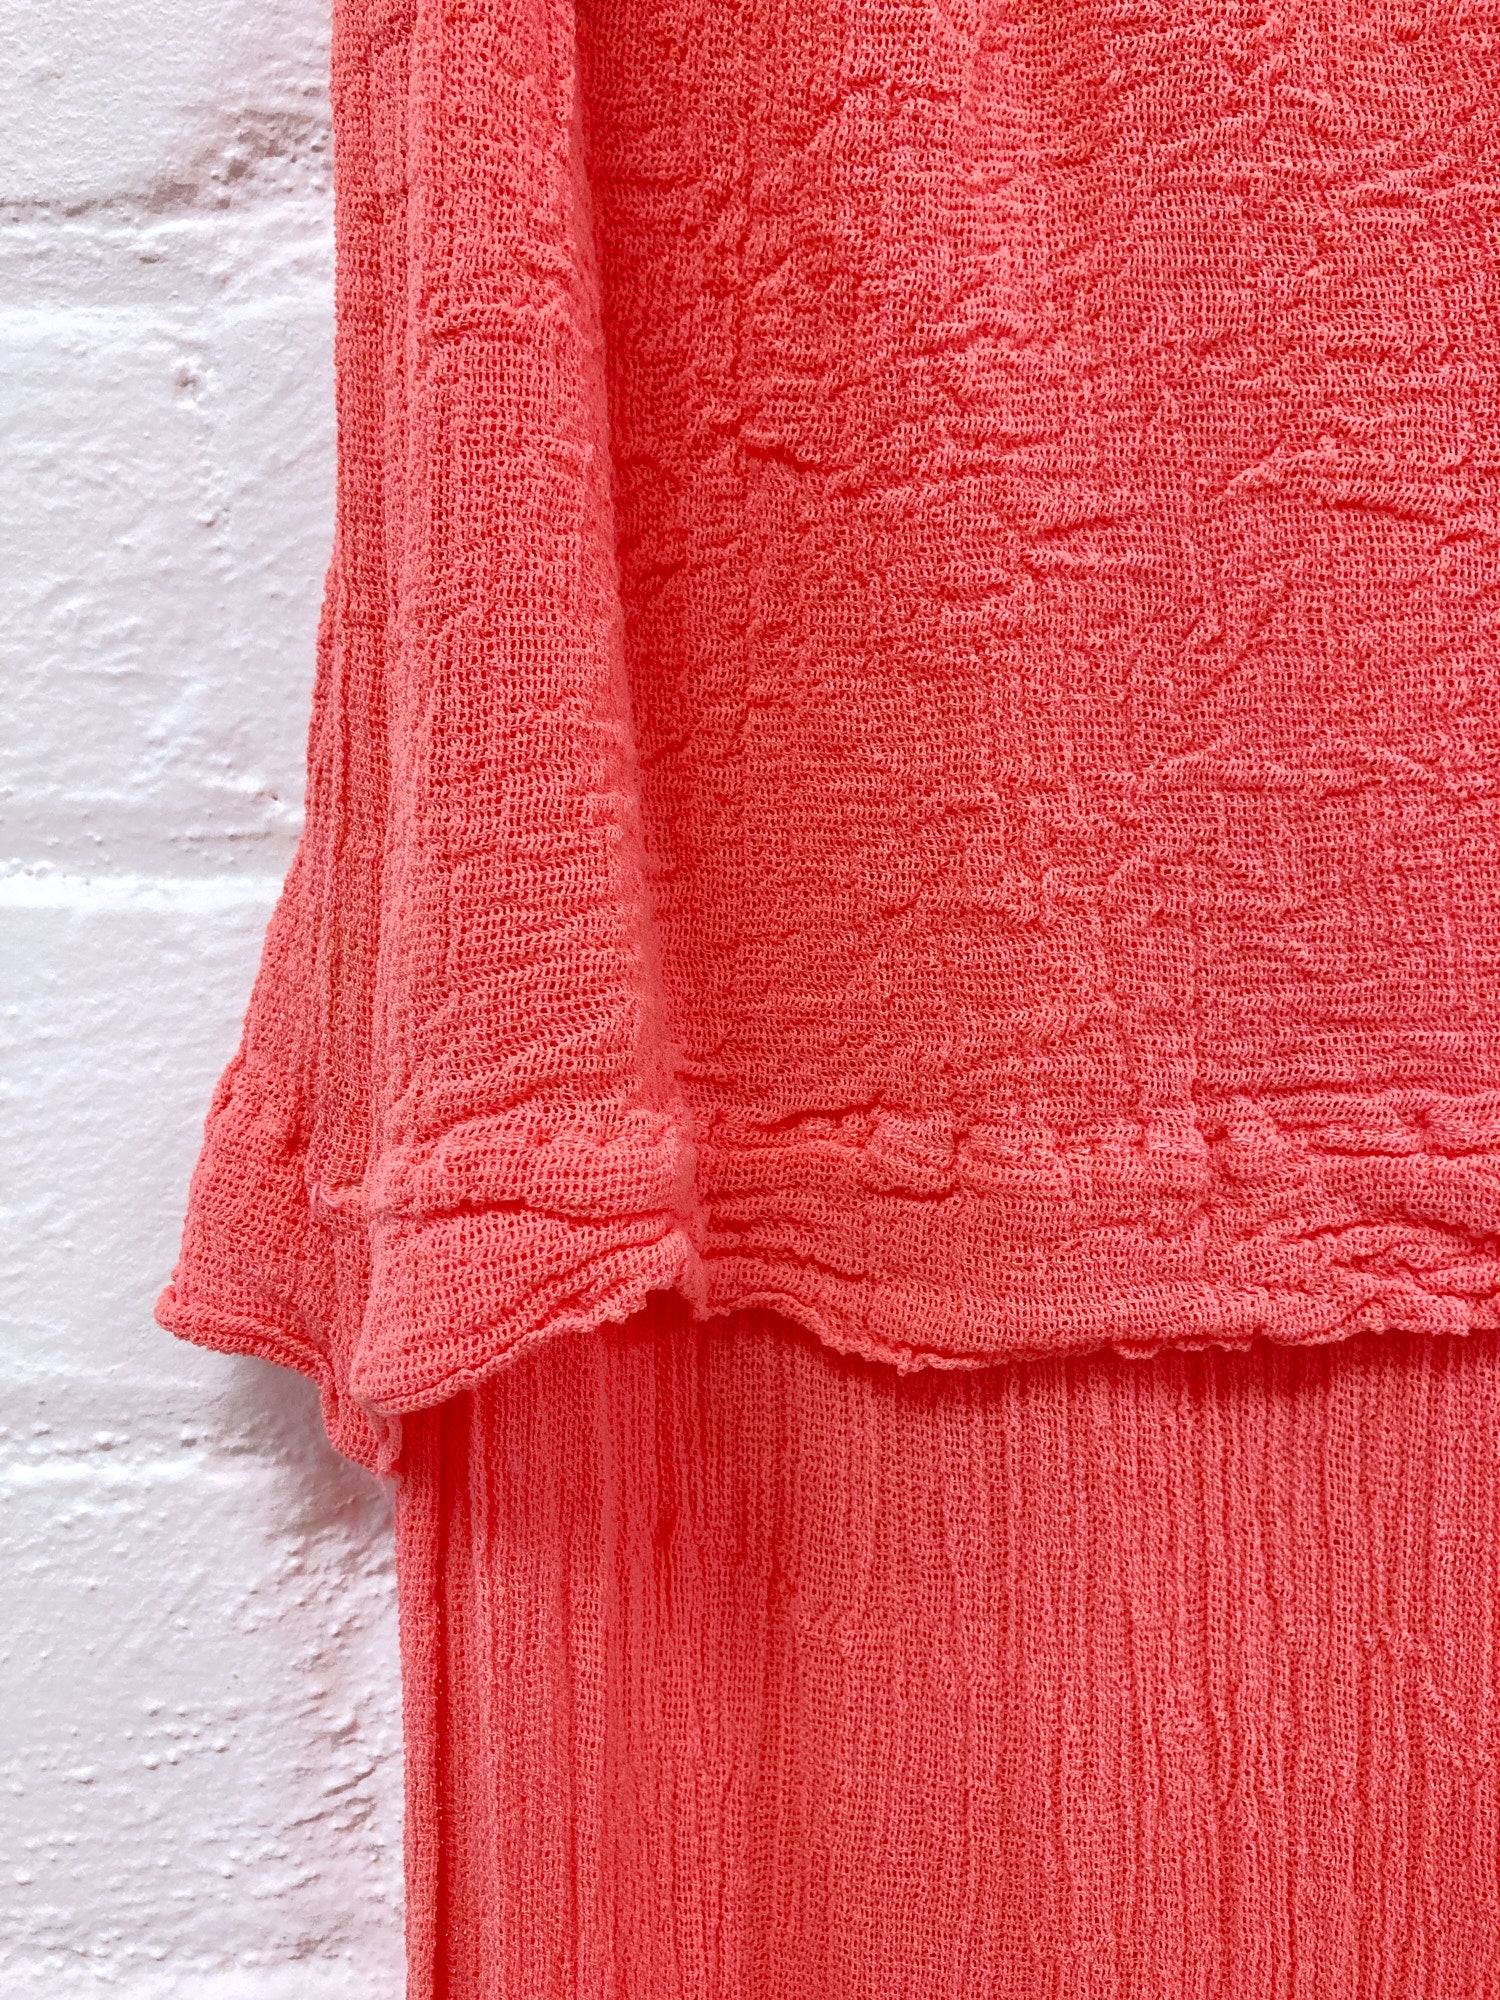 Issey Miyake Permanente creased pink cotton layered skirt or tube dress - M S